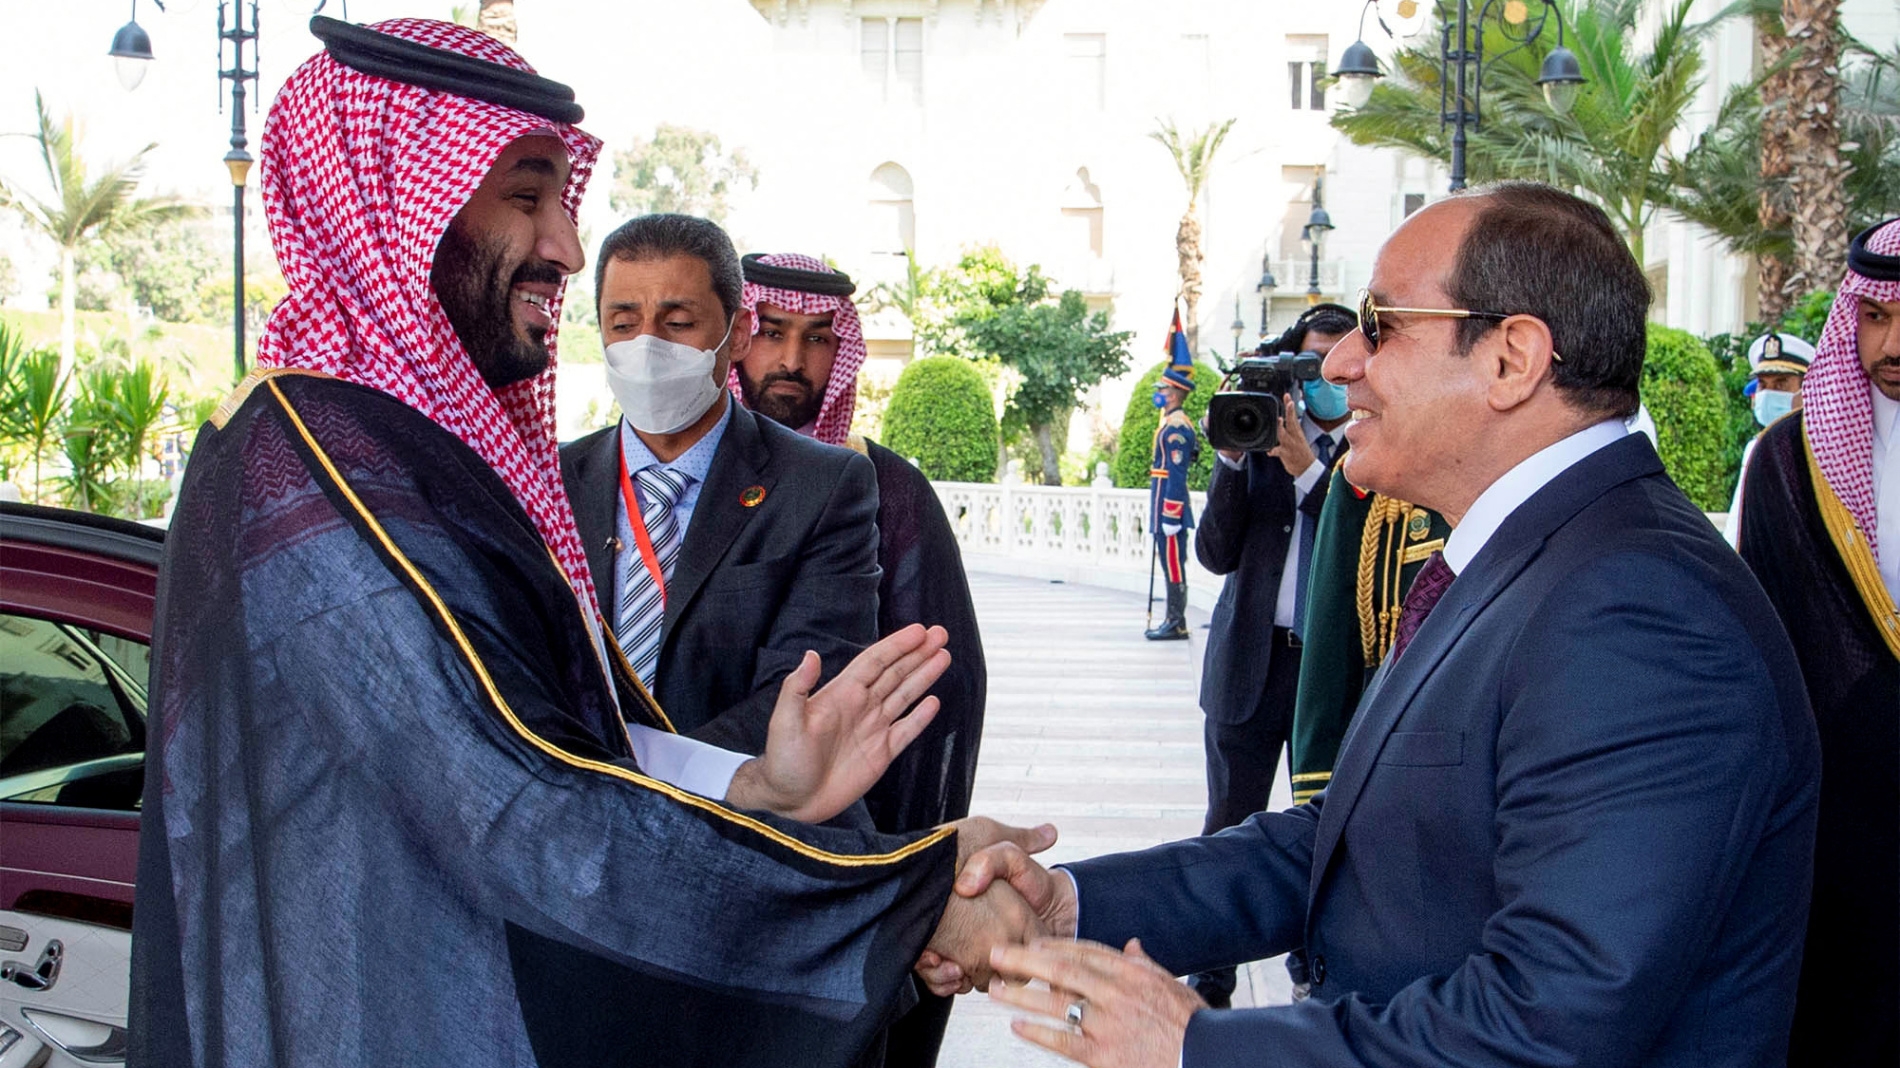 Saudi Crown Prince, Mohammed bin Salman meets Egyptian President Abdel Fattah el-Sisi during his visit to Cairo on 21 June 2022 (Reuters/Handout)